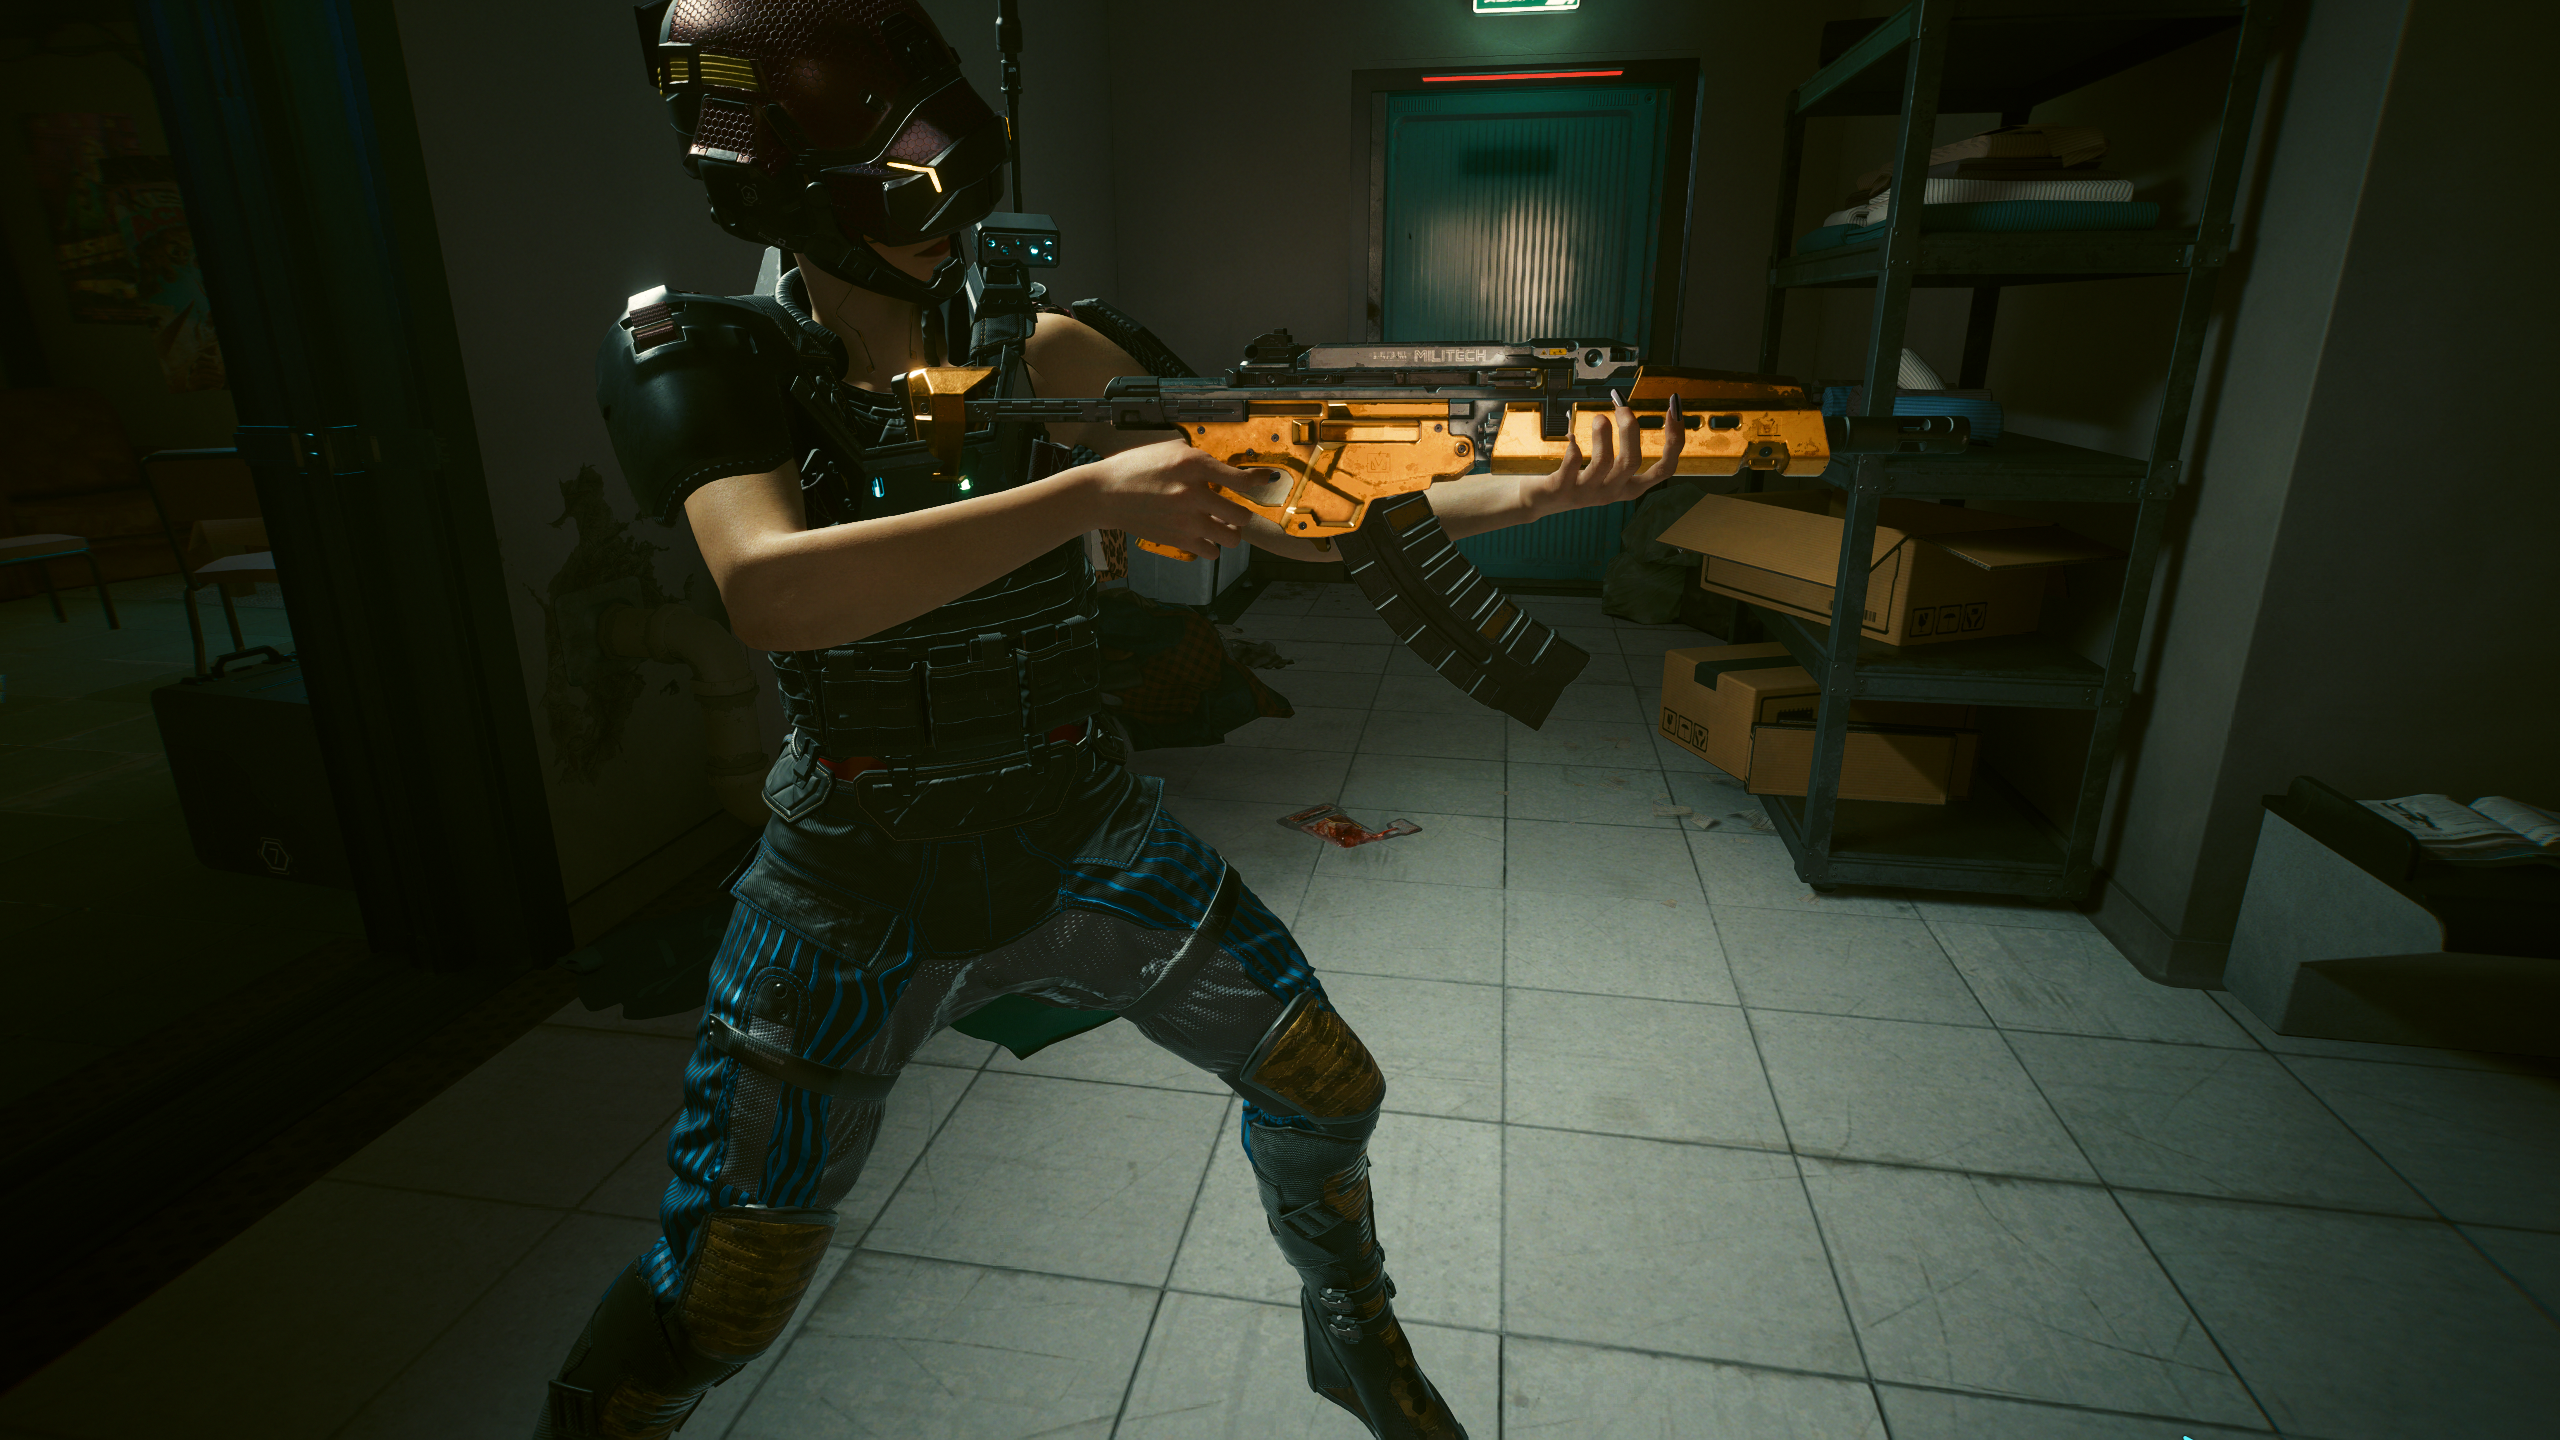 An armored character holding an assault rifle in Cyberpunk 2077.